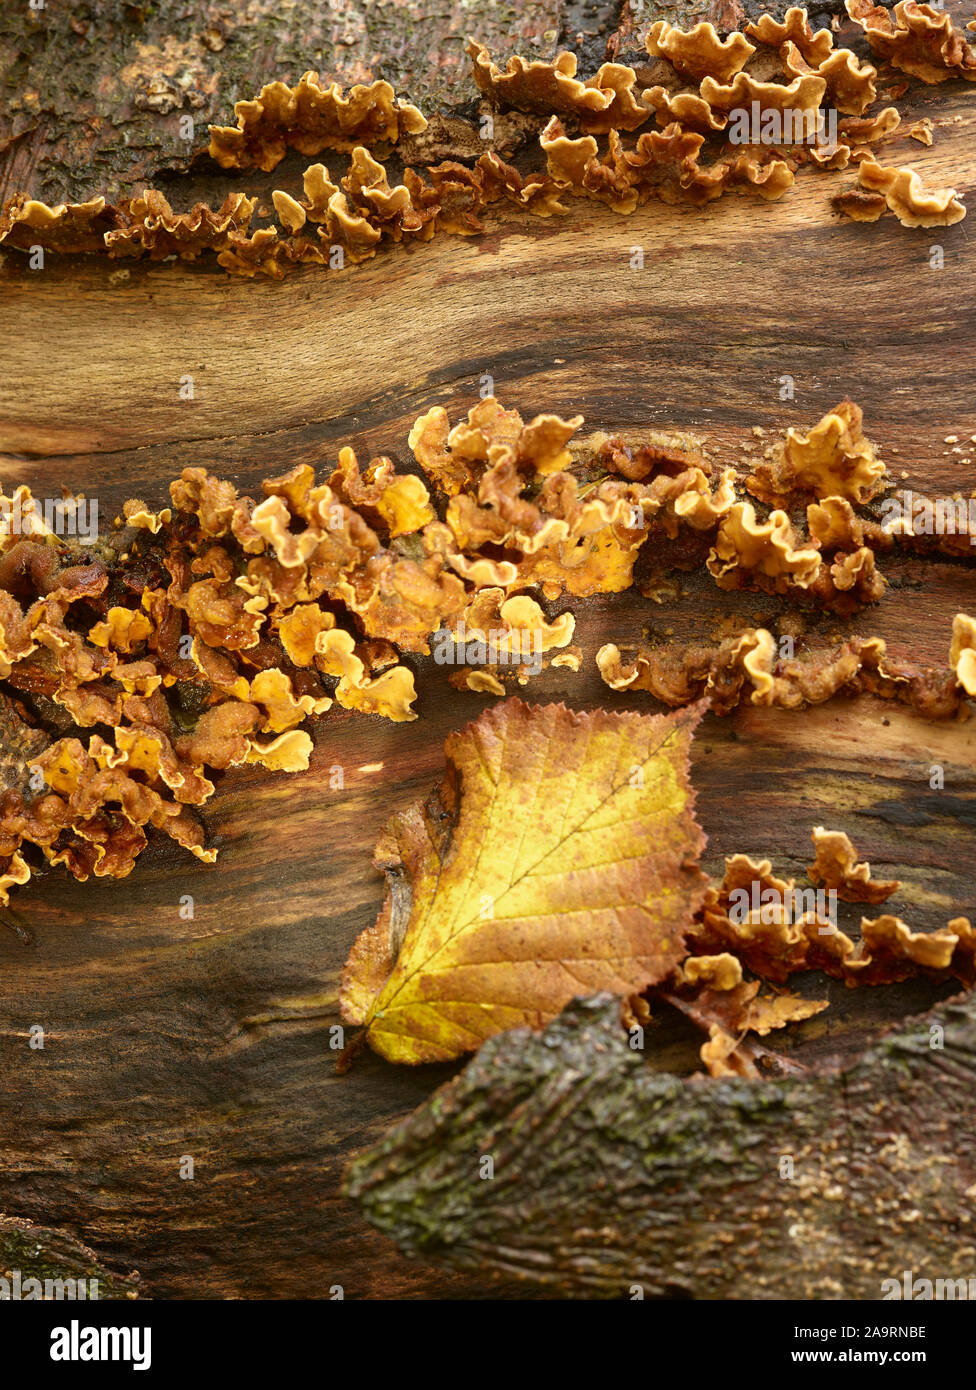 Stereum hirsutum, false turkey tail fungi on tree trunk, Surrey, England, United Kingdom, Europe Stock Photo